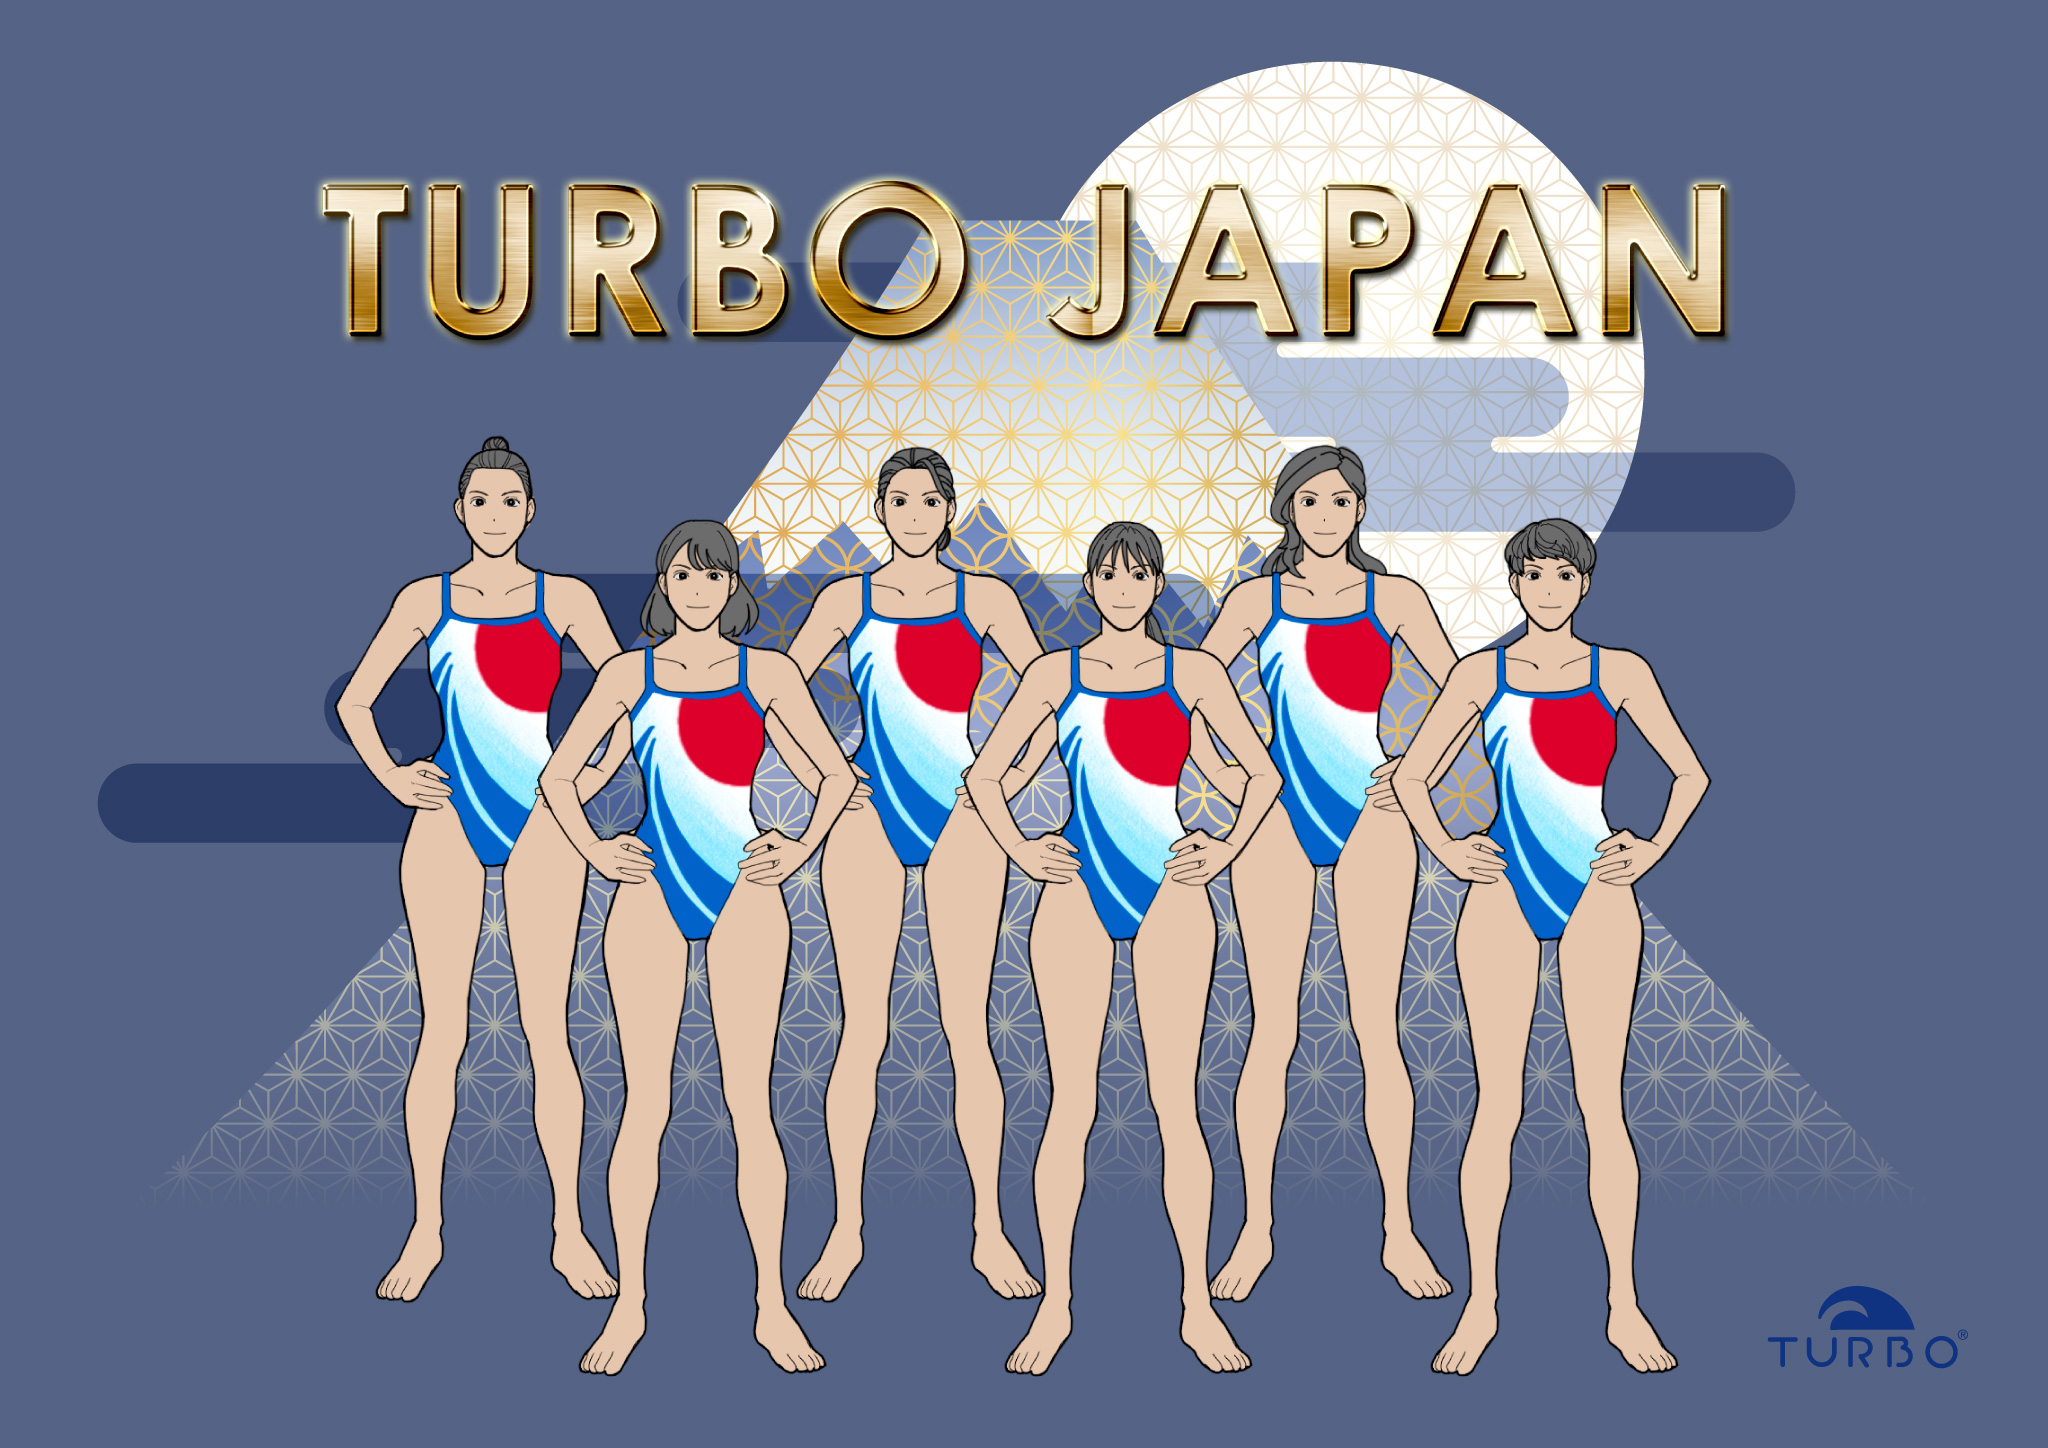 Turbo Japan national team